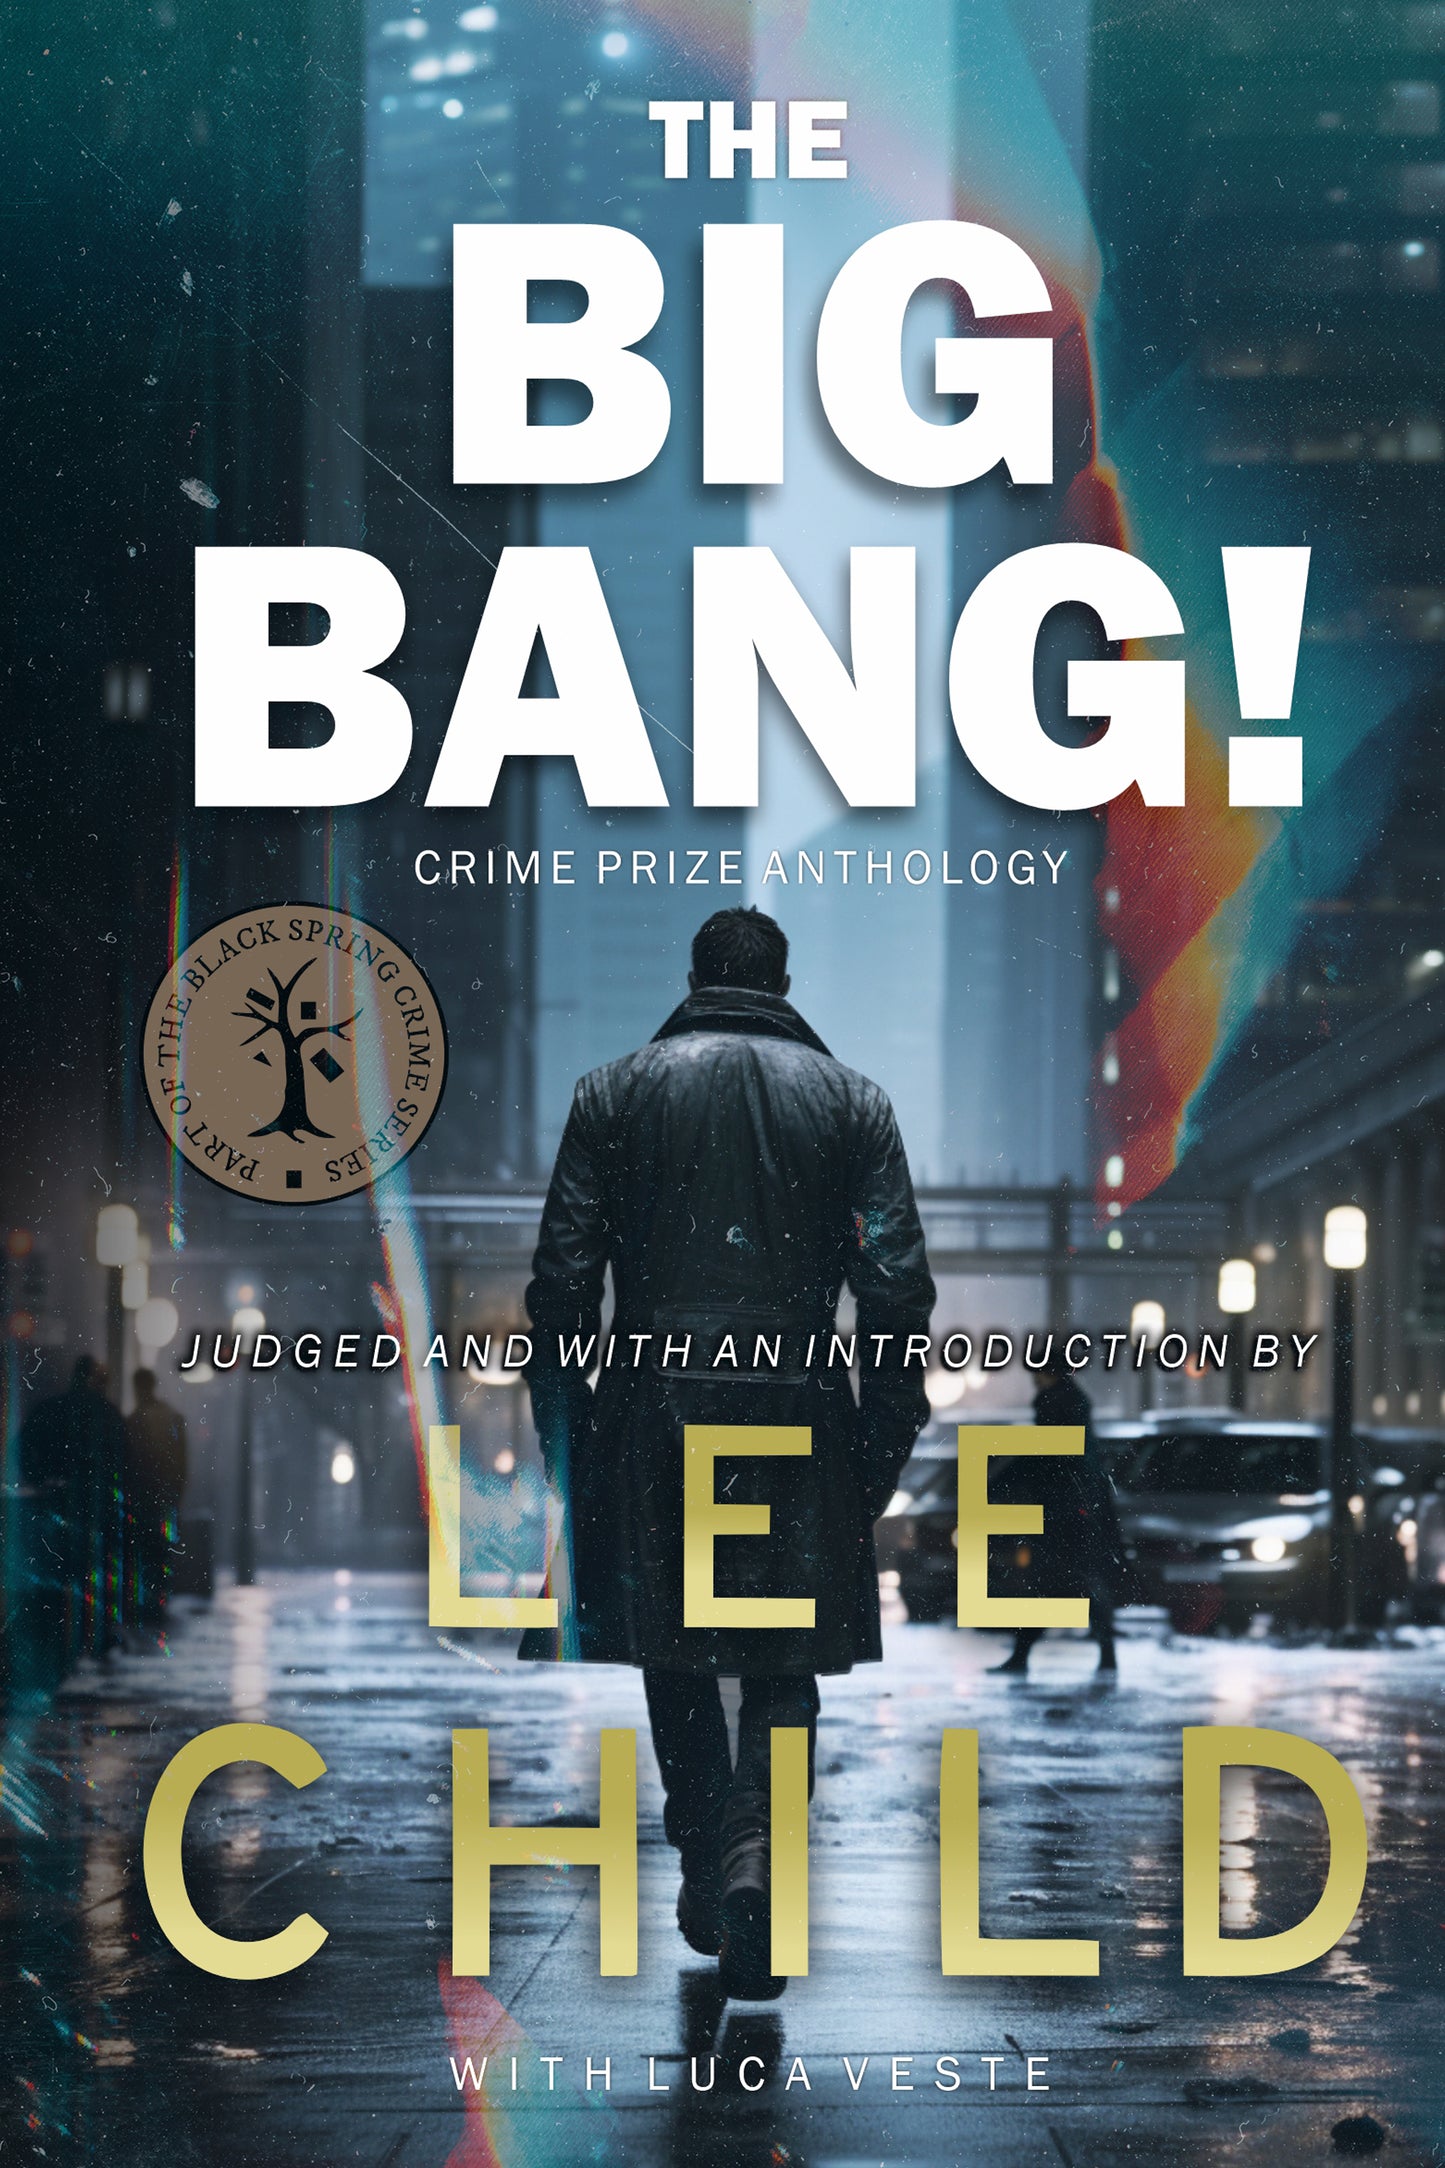 The Big Bang! Crime Prize Anthology